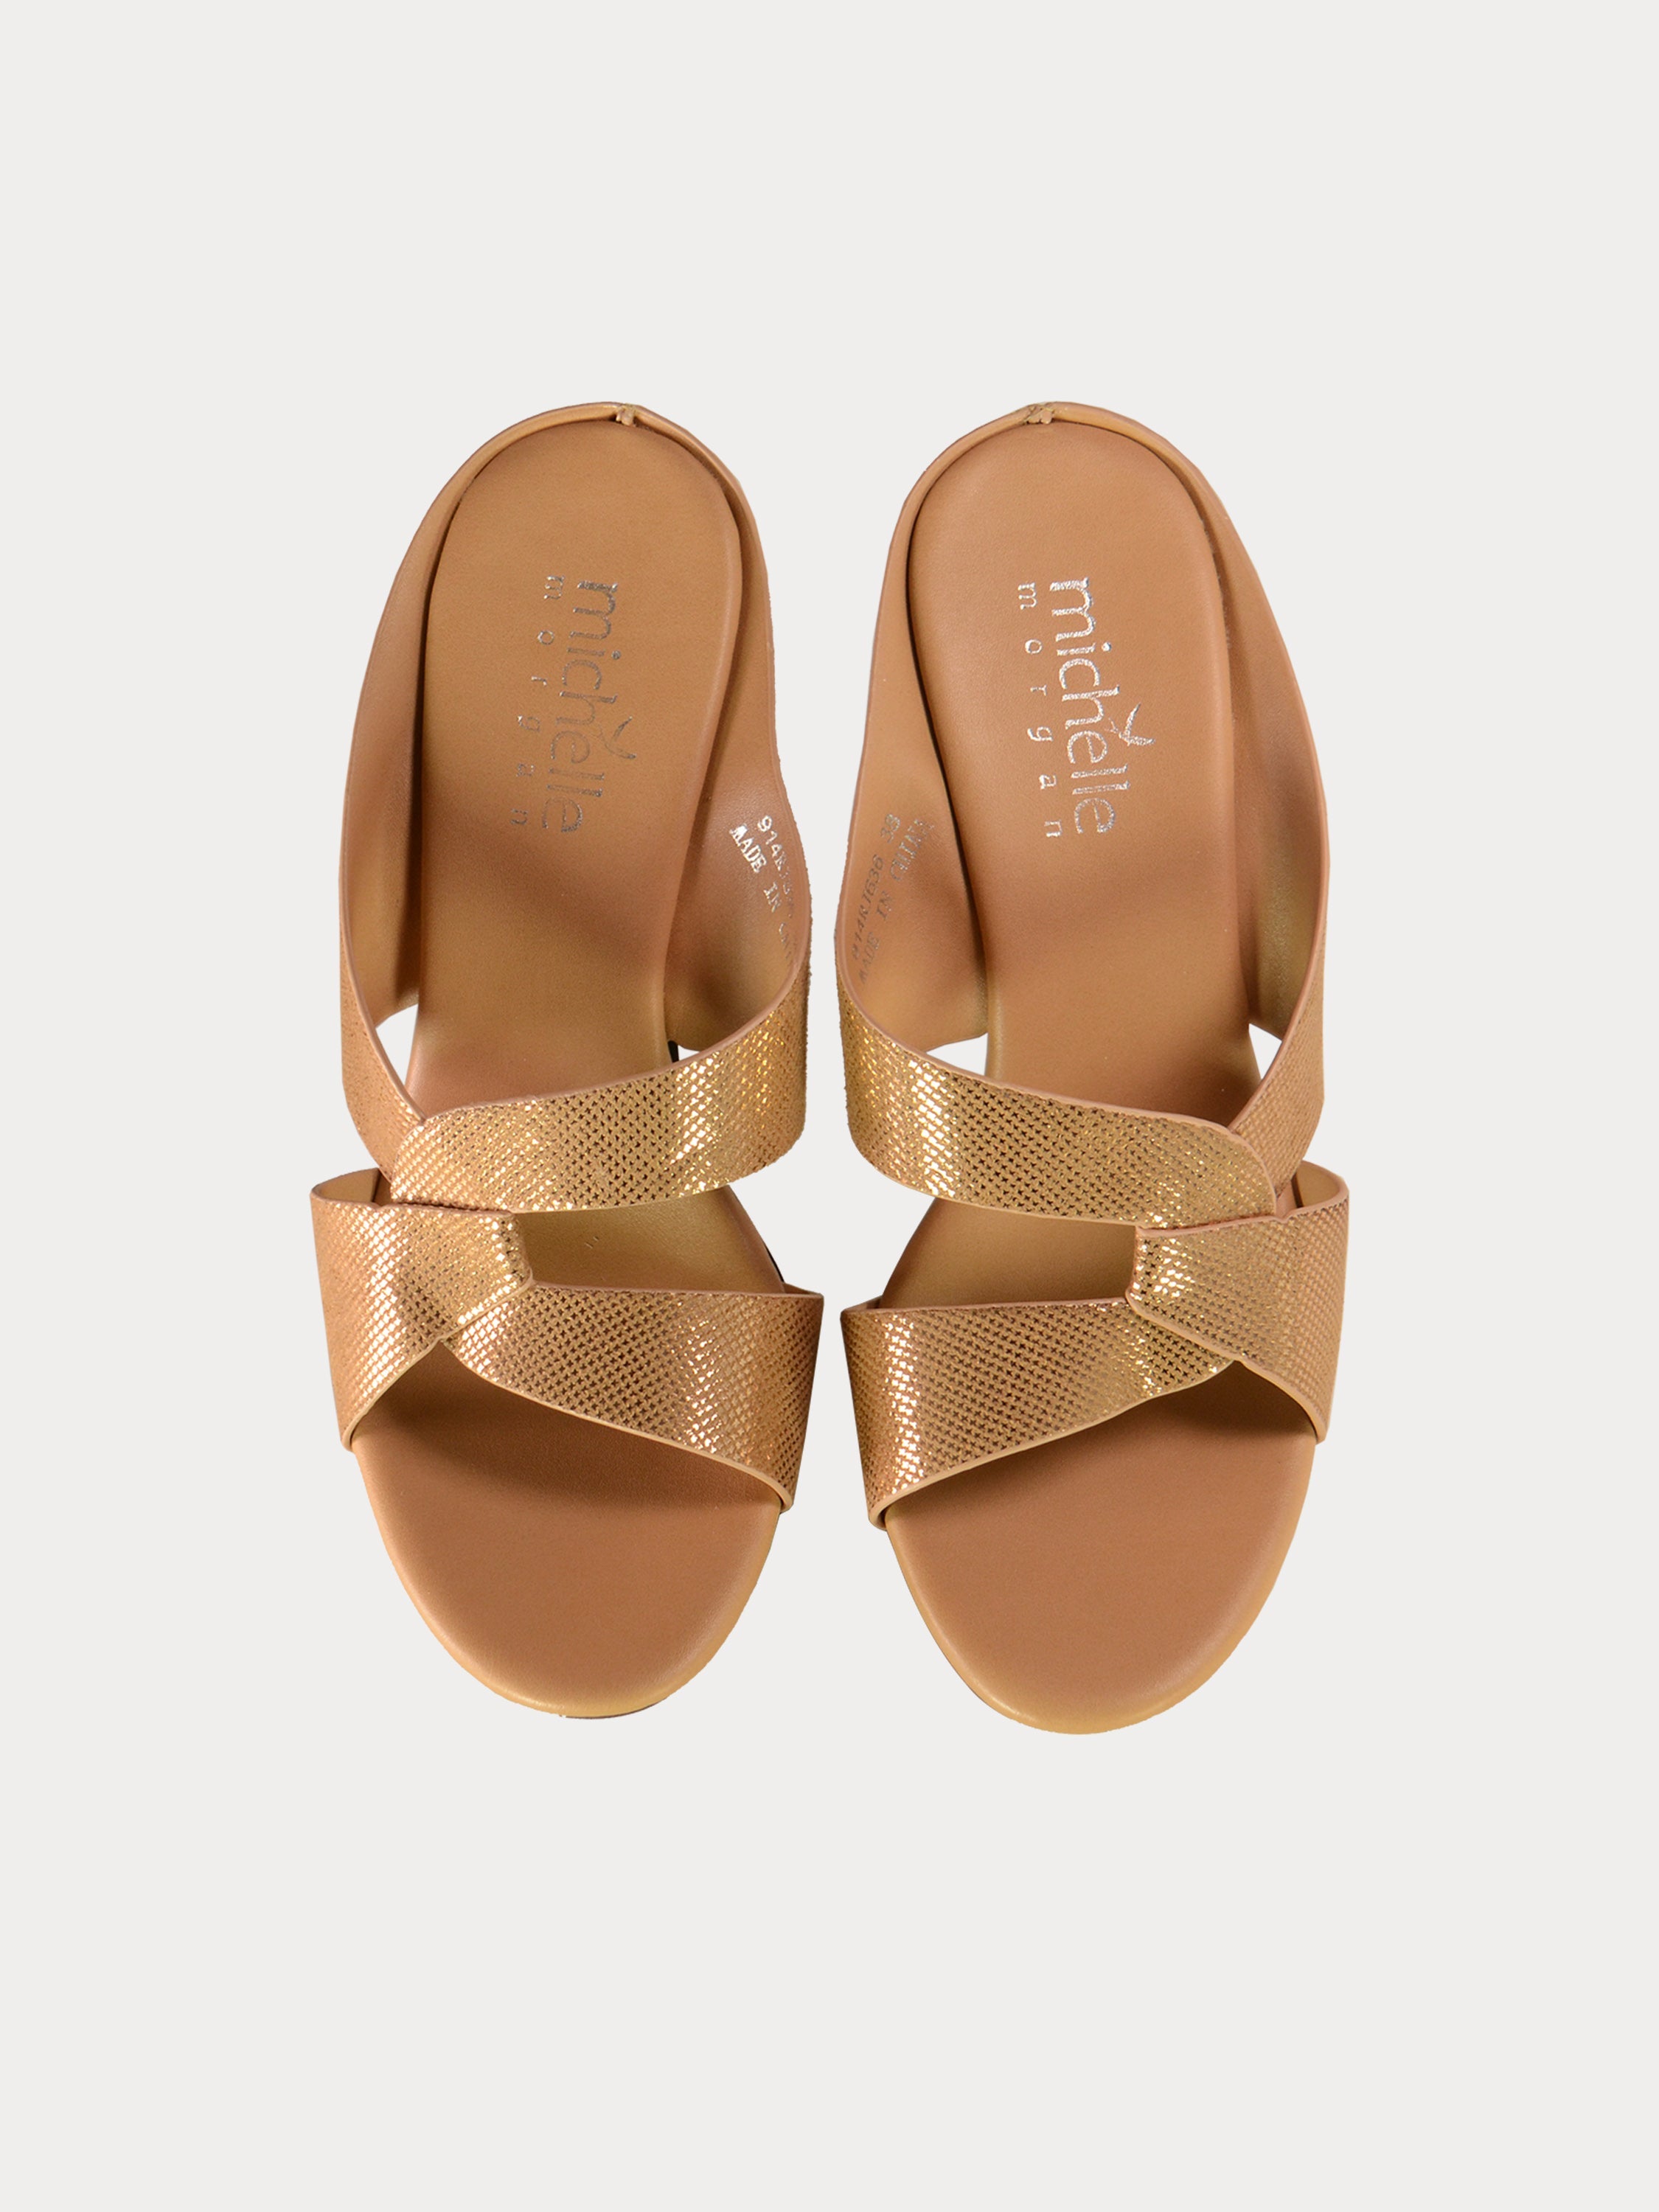 Michelle Morgan 914RJ636 Women's Glitzy Heeled Sandals #color_Brown